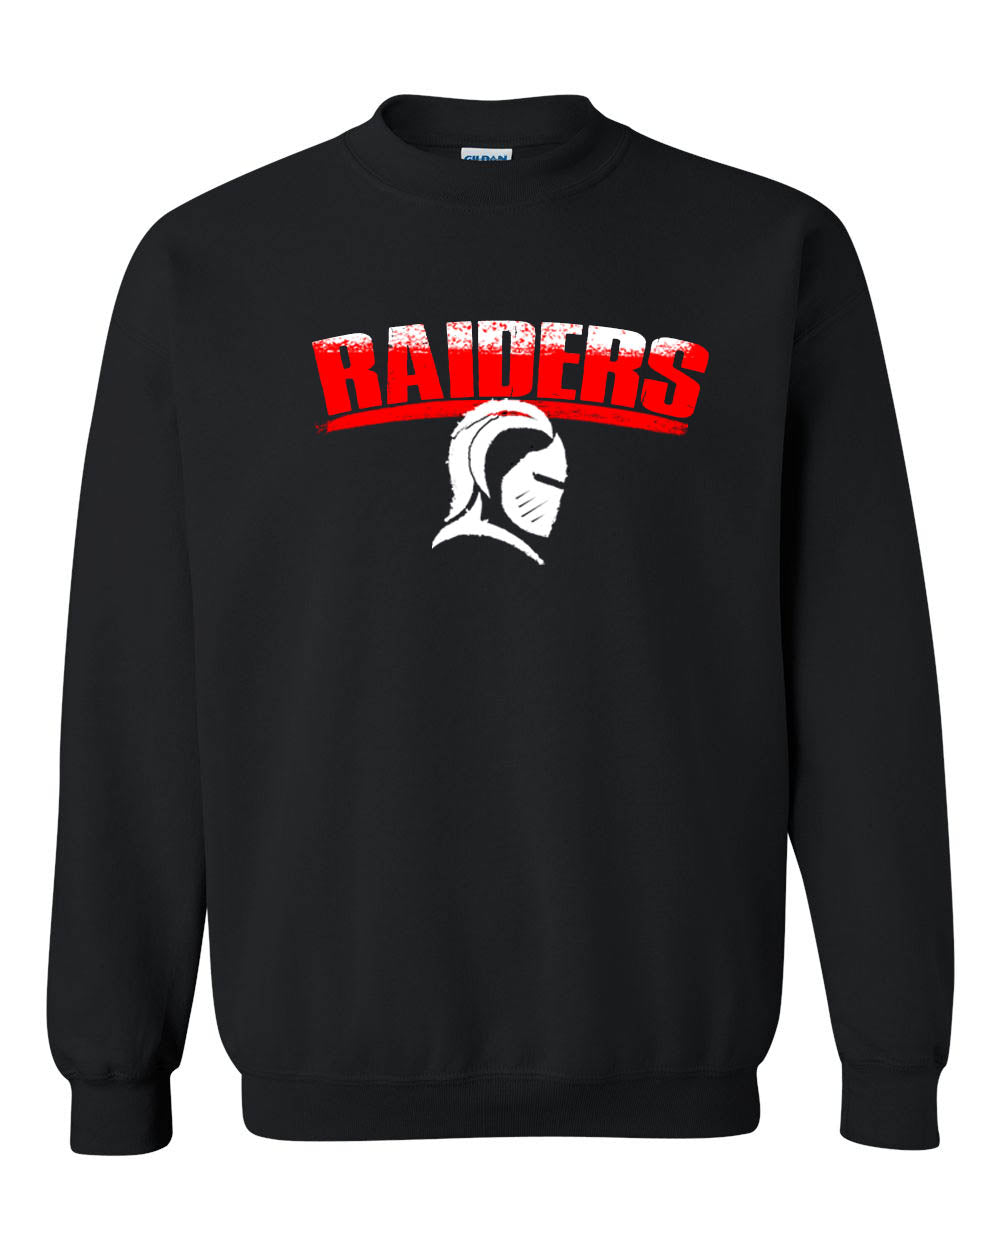 Raiders non hooded sweatshirt